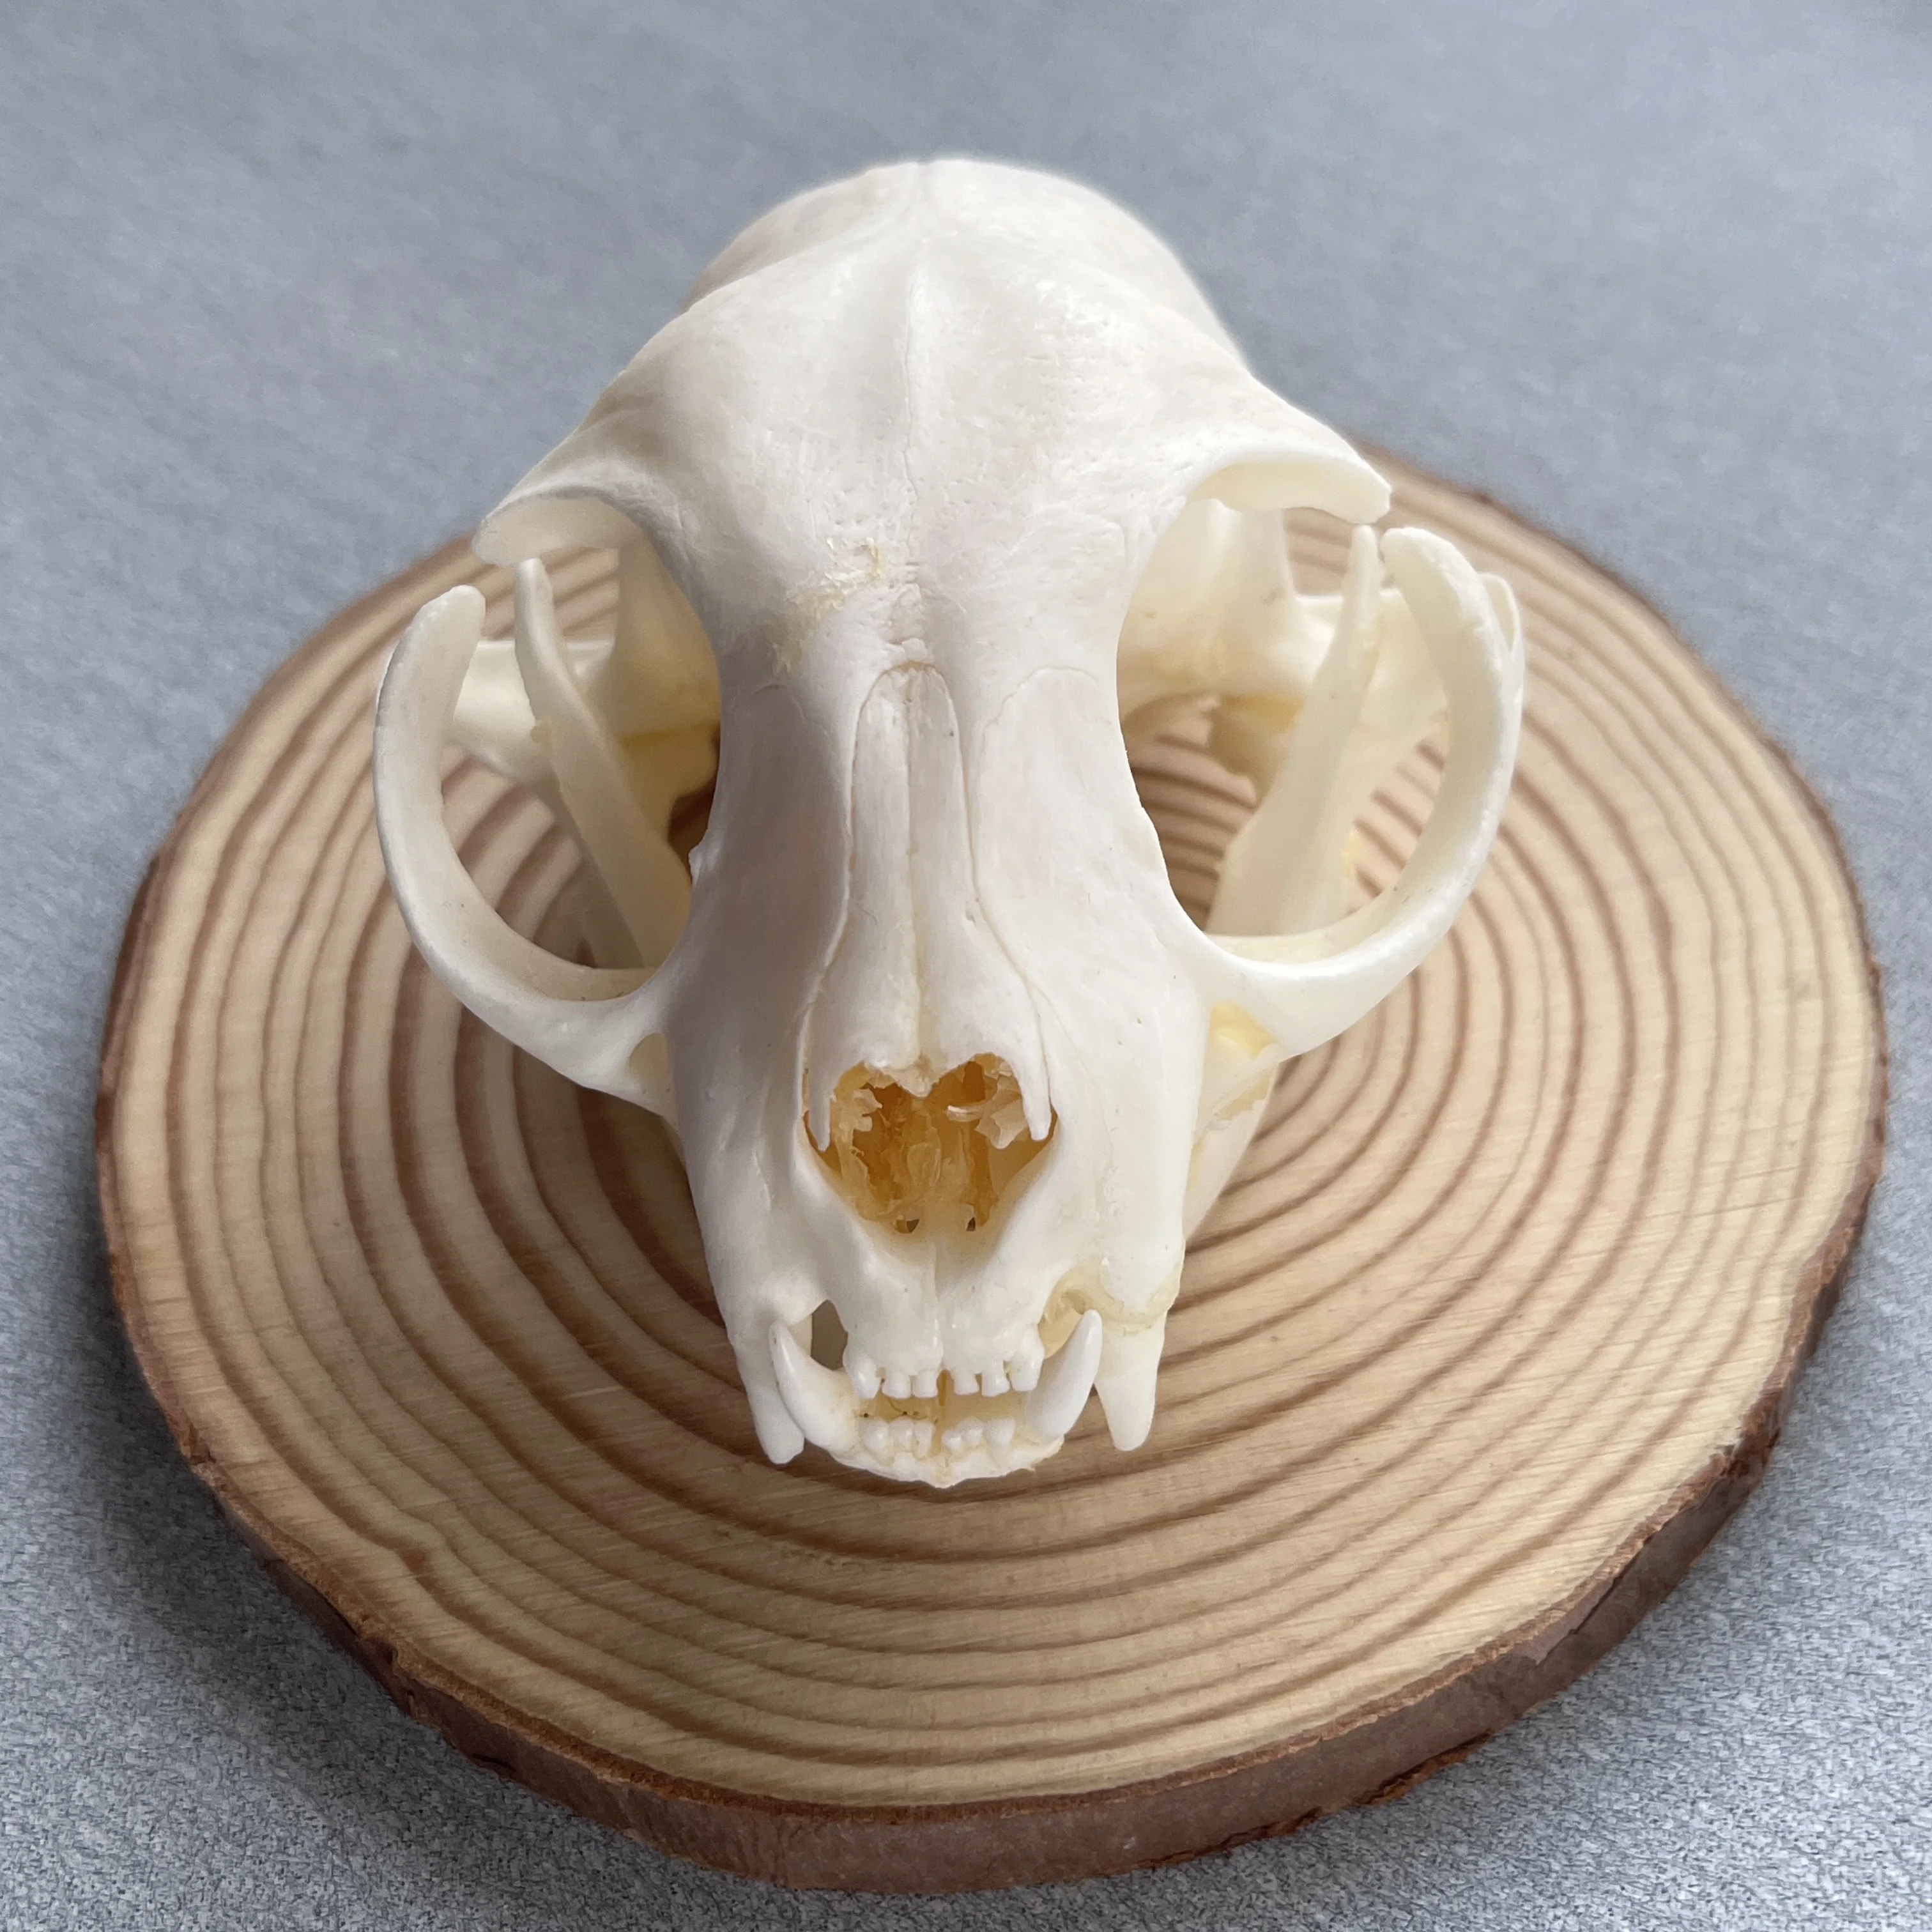 10 Pcs Mink Skull/ Real Animal Skull/ Real Bone/ Decoration /Gift/ New/ Craft/ 